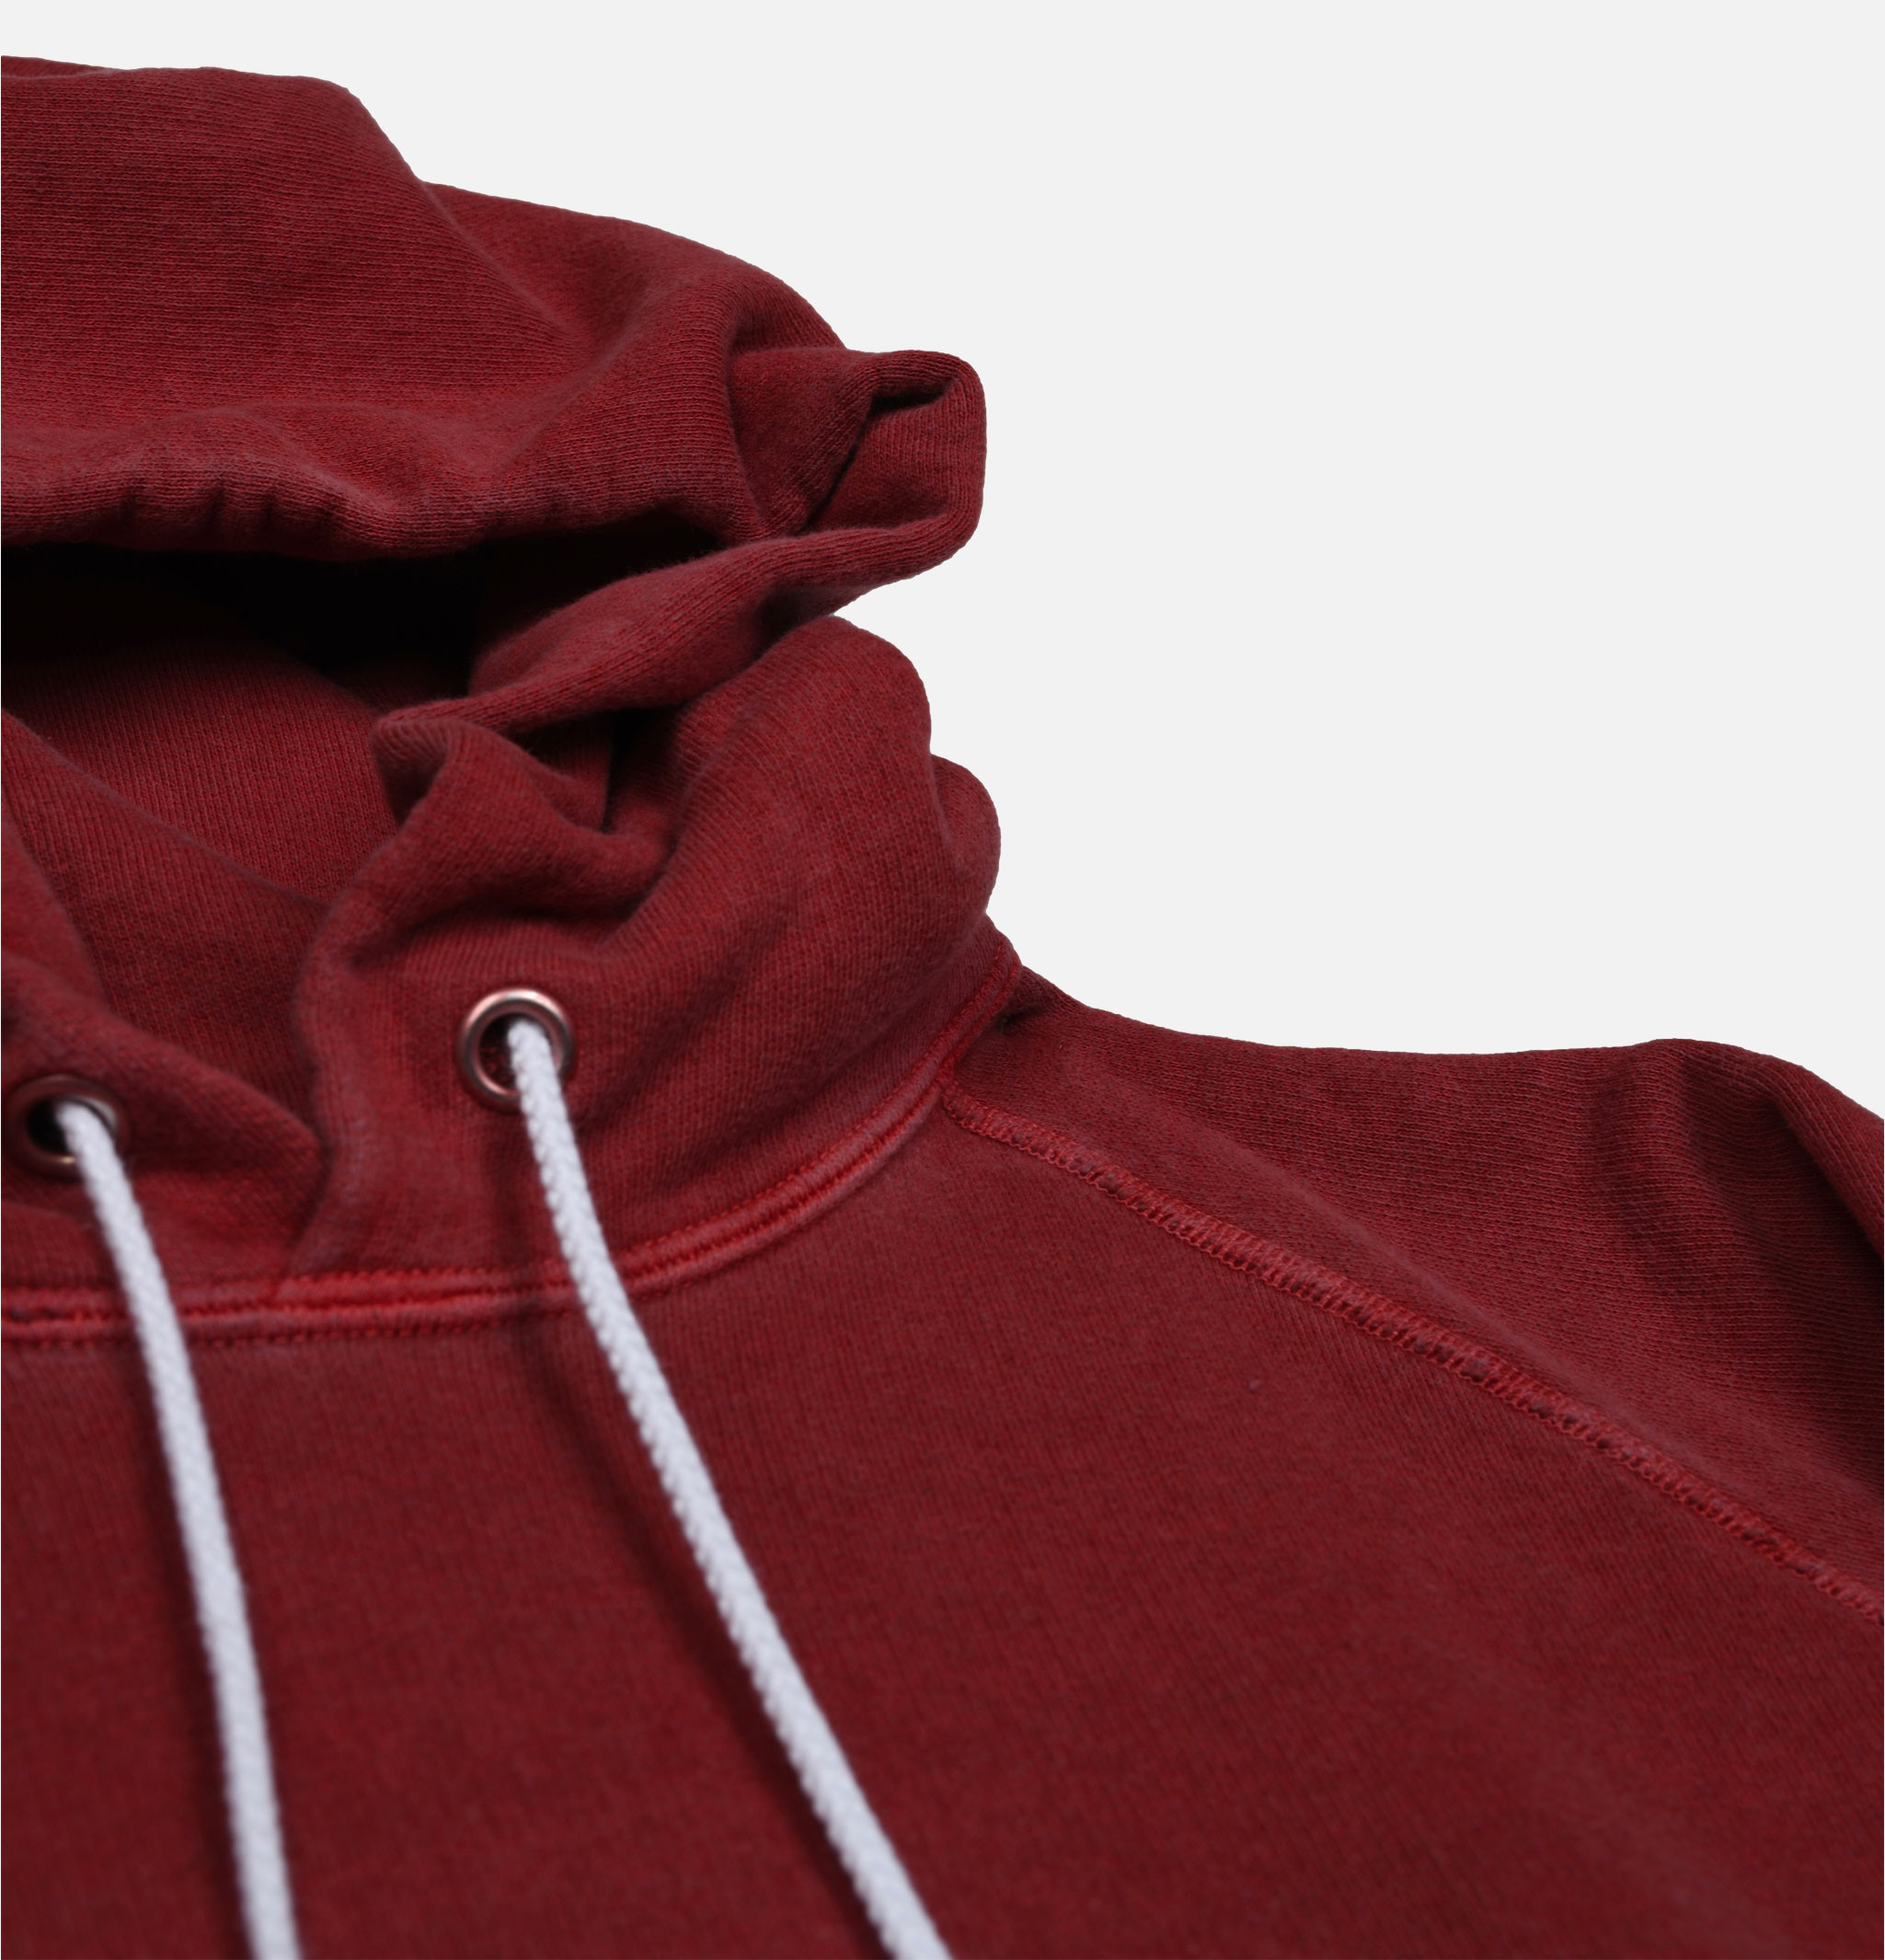 Good On Japan Pullover Hooded Sweatshirt Red